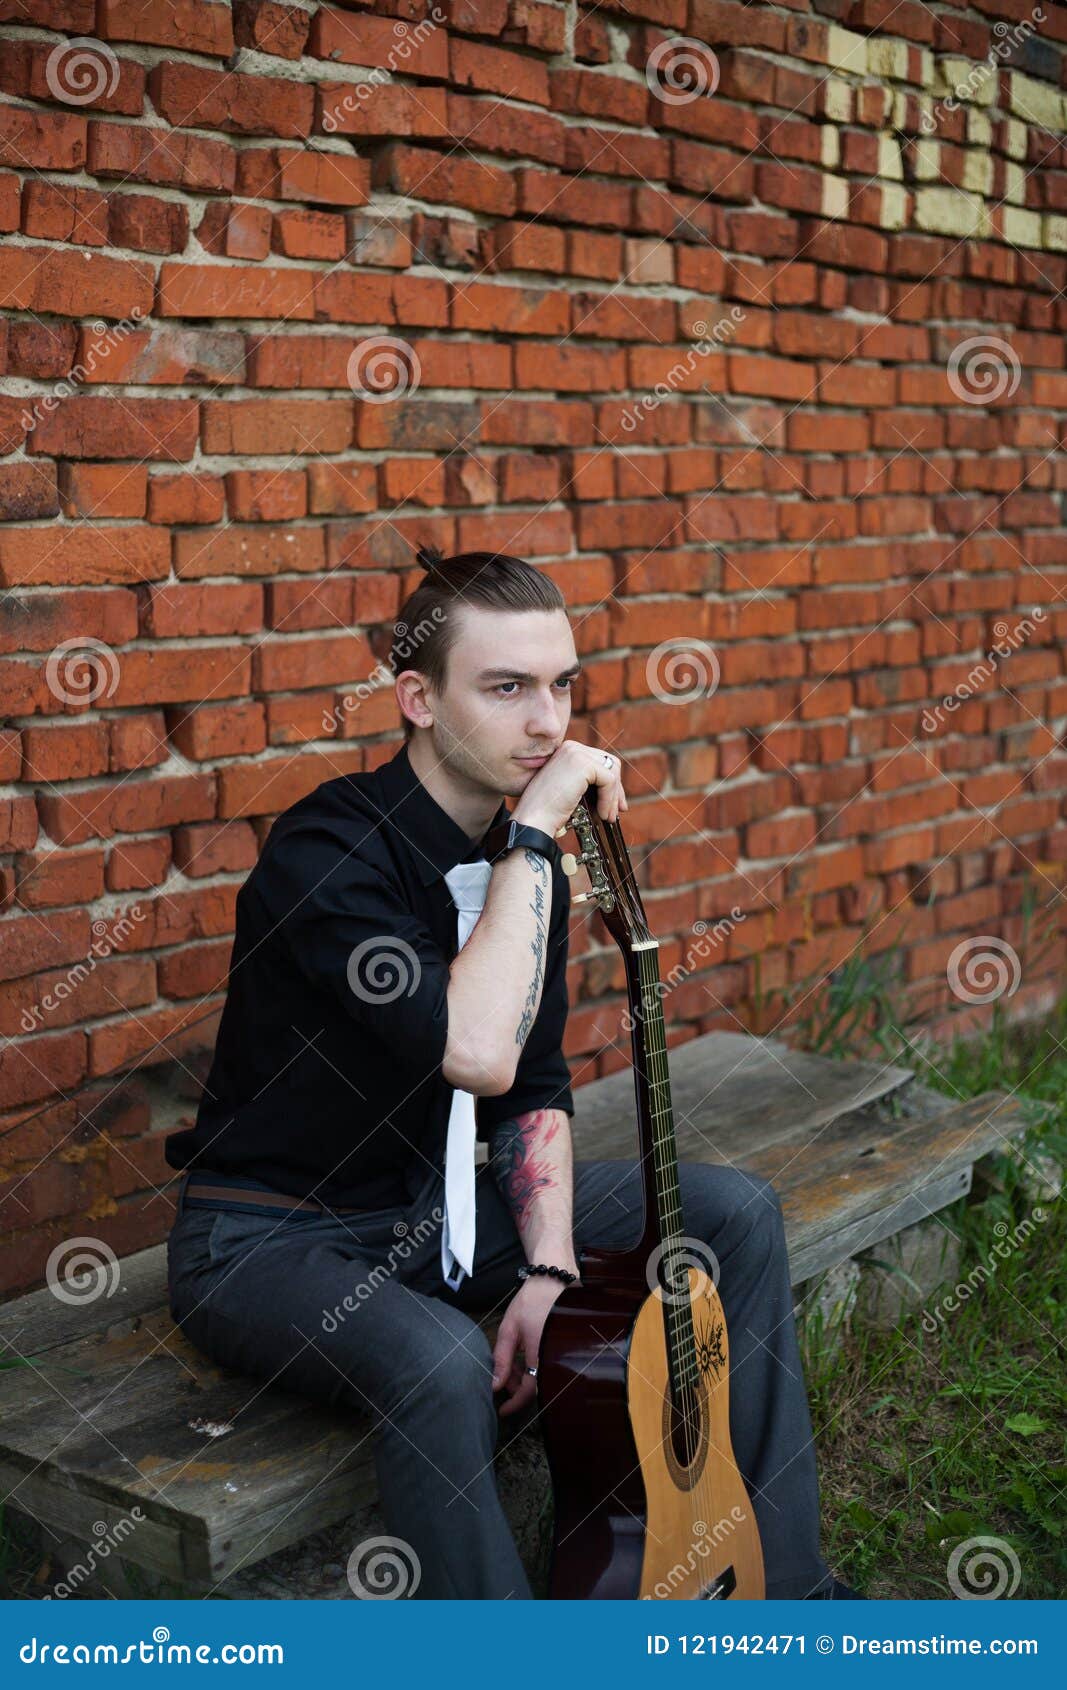 stylish man with guitar